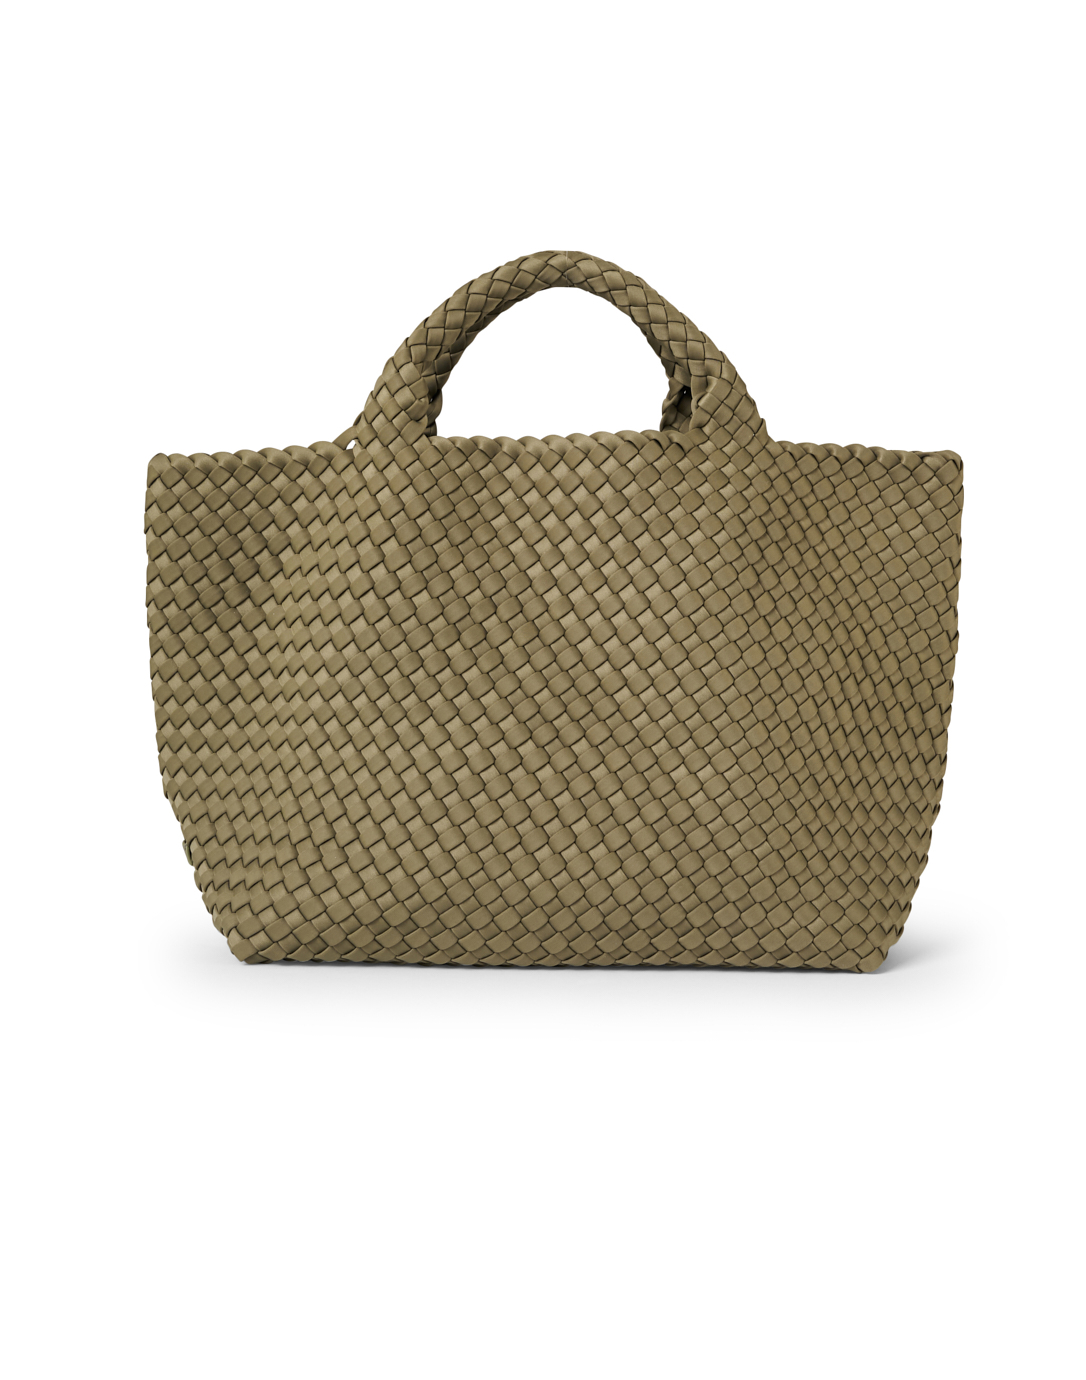 Neoprene Tote Bag | Large Tote Bag | Beach Travel Bag | Brown Checker